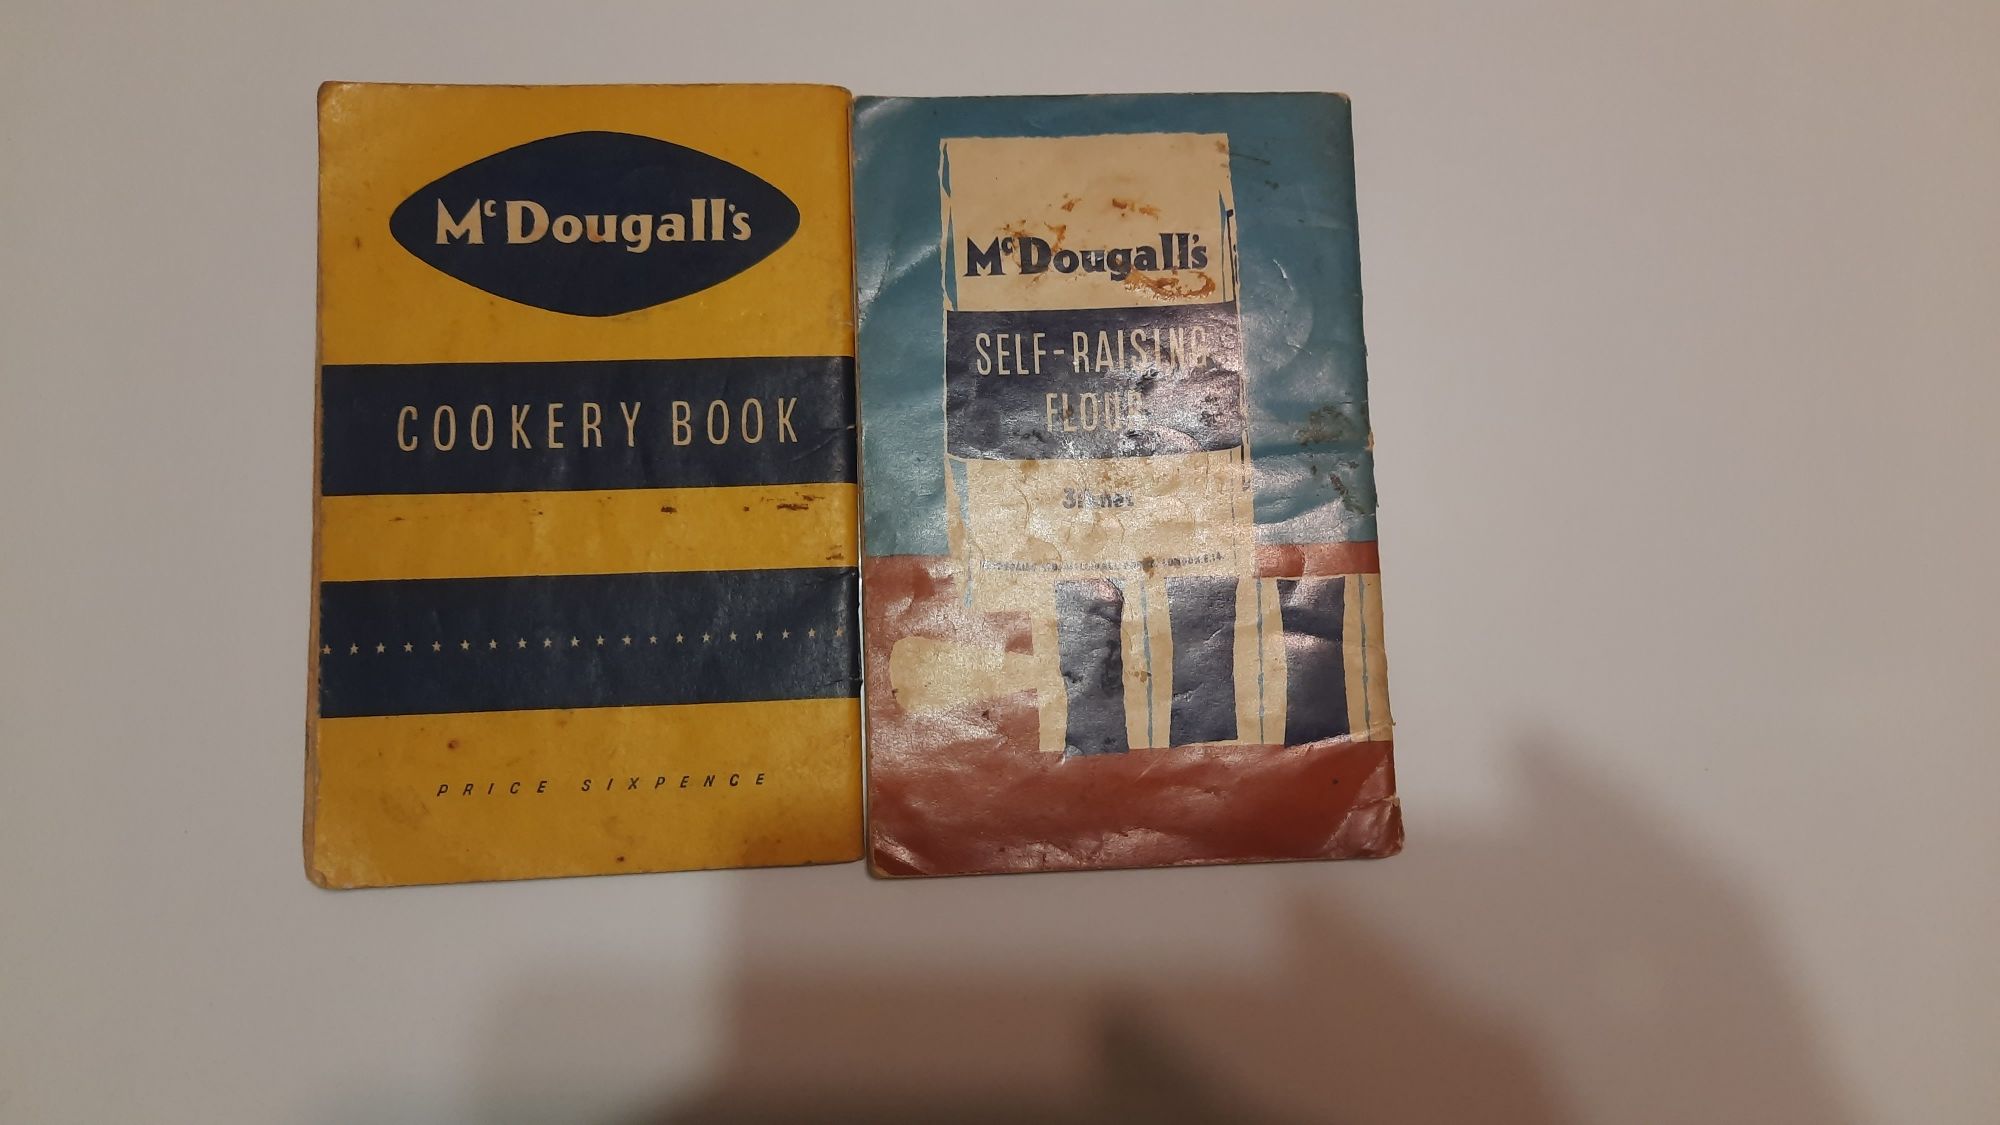 McDougall's  COOKERY BOOK, вінтажні кулінарні видання 23 та 24

McDoug